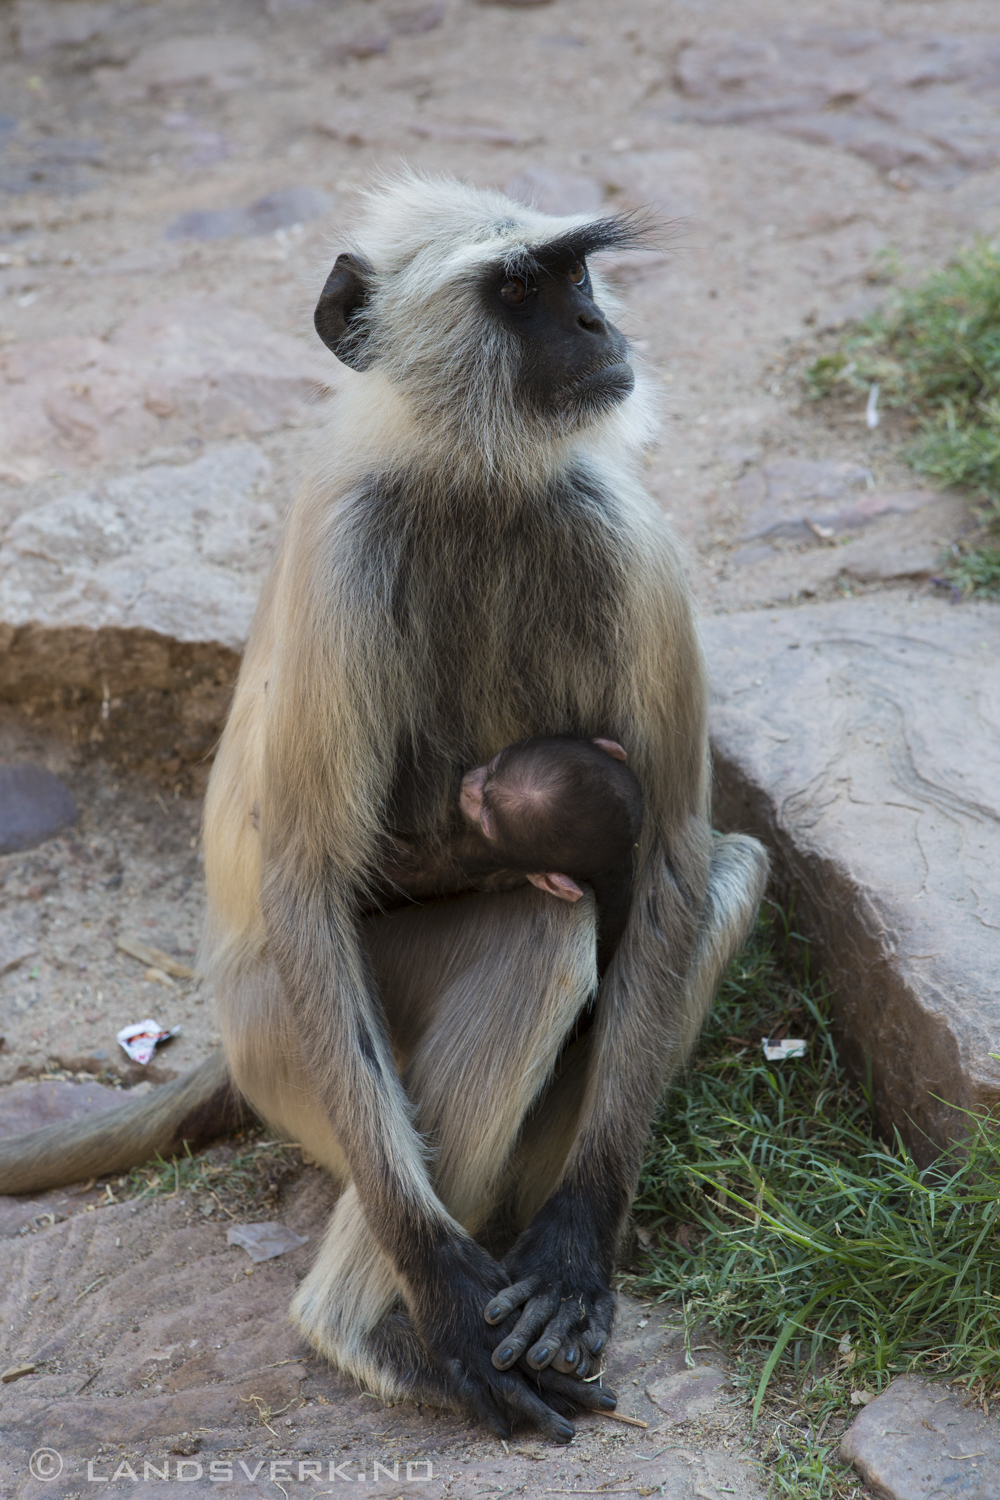 Wild hanuman monkey. Ranthambore, India. 

(Canon EOS 5D Mark III / Canon EF 24-70mm f/2.8 L USM)